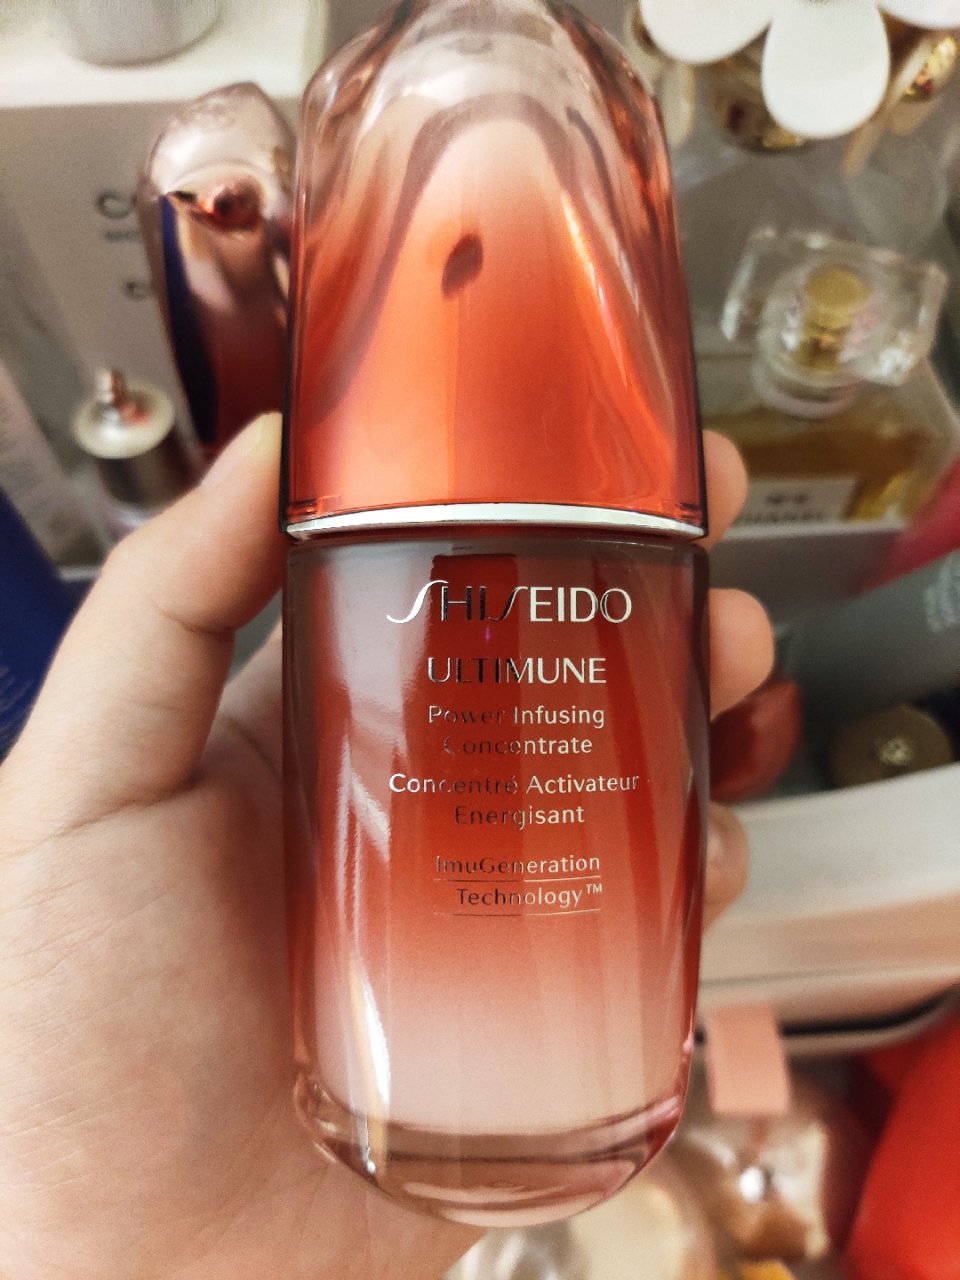 护肤好物推荐-  Shiseido红腰子...